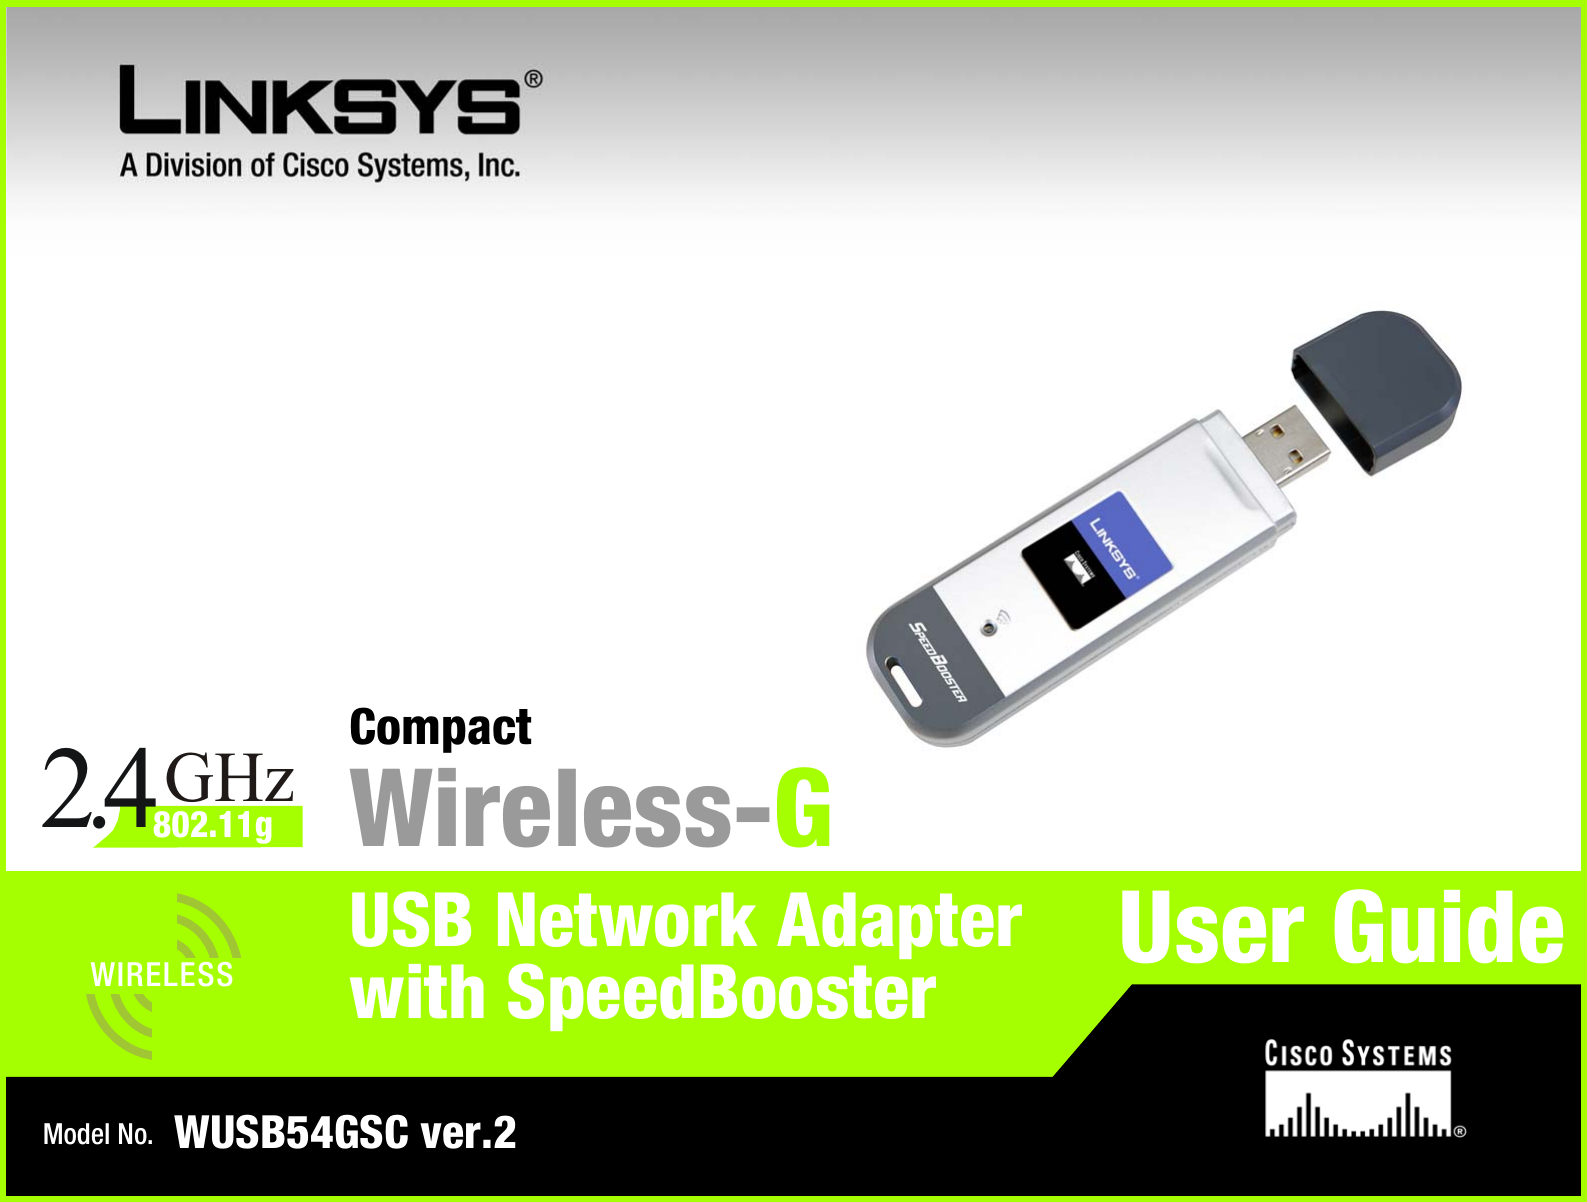 Model No.USB Network AdapterWireless-GWUSB54GSC ver.2User GuideWIRELESSGHz2.4802.11gCompactwith SpeedBooster